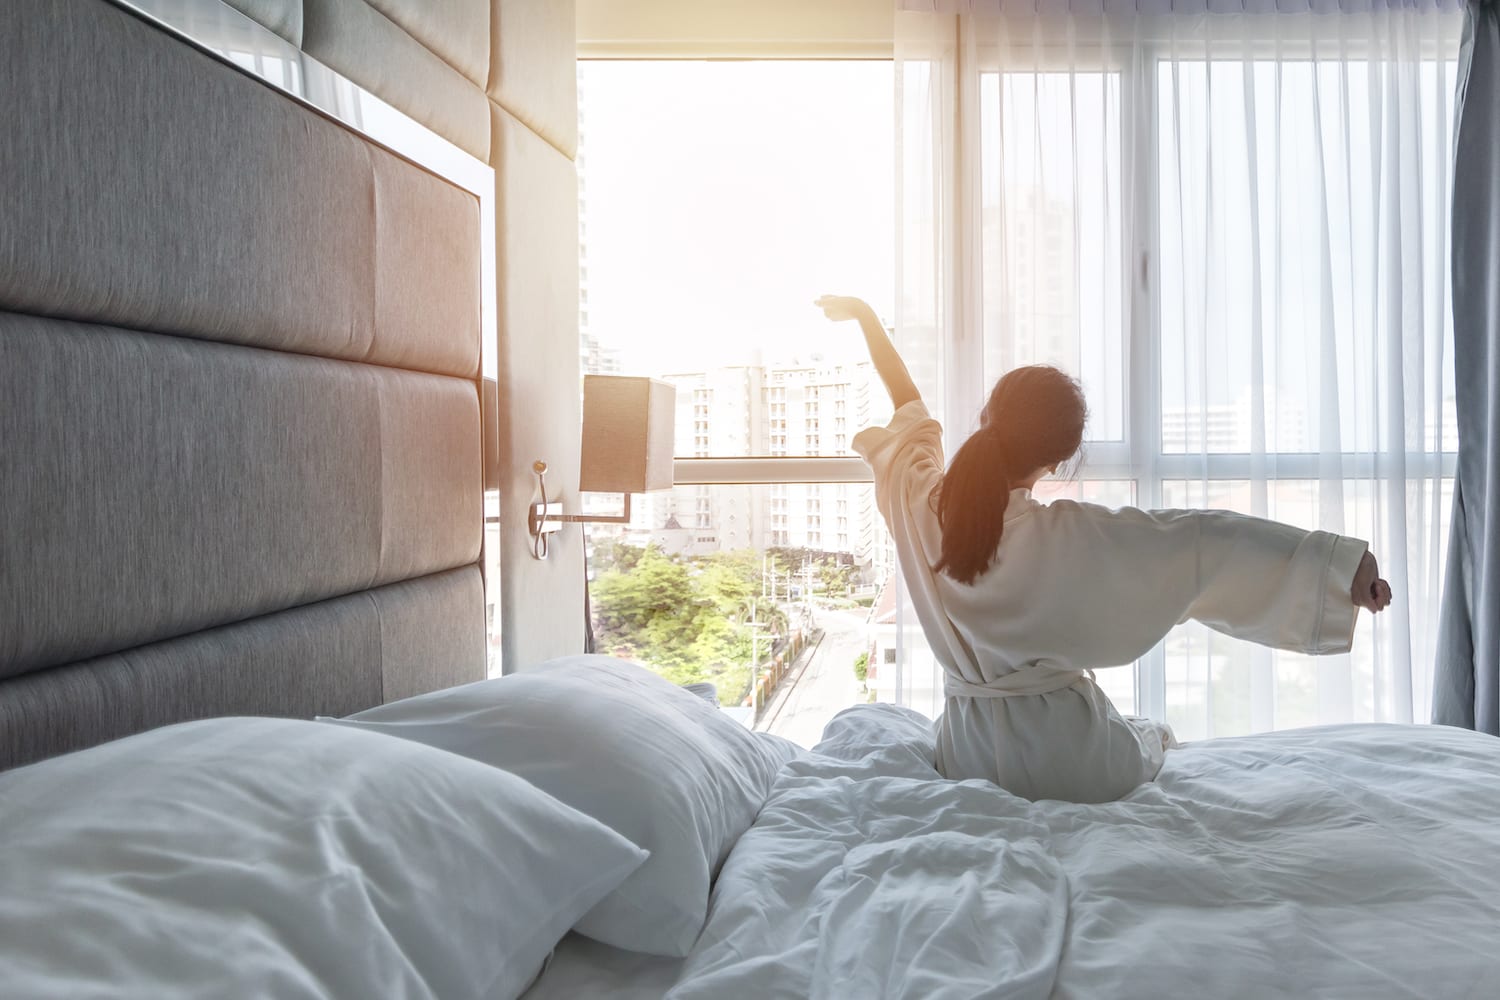 How to Get a Good Nights Sleep in a Hotel Sleep Foundation